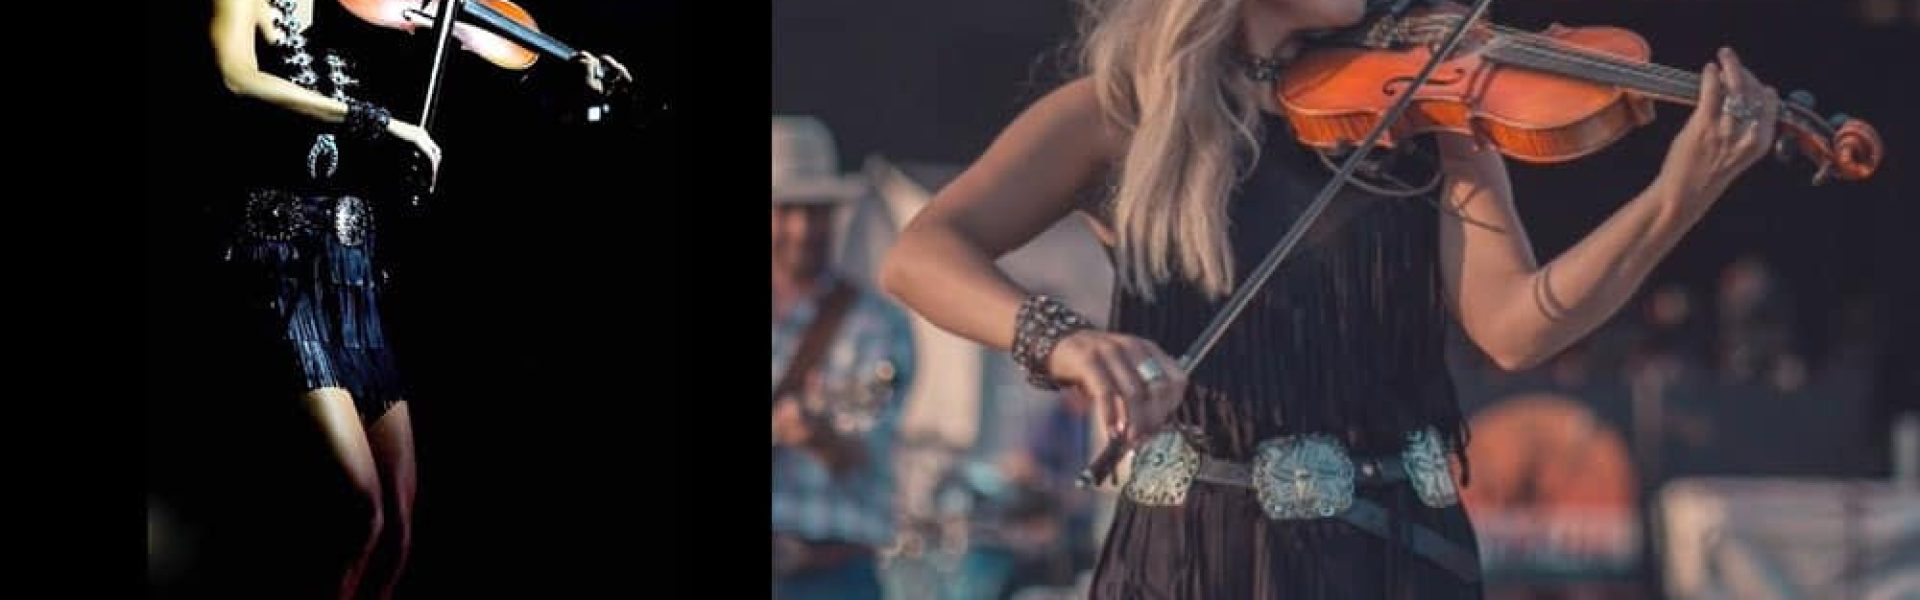 Brooke latke chance Williams band fiddle violin country music western fashion cowgirl magazine